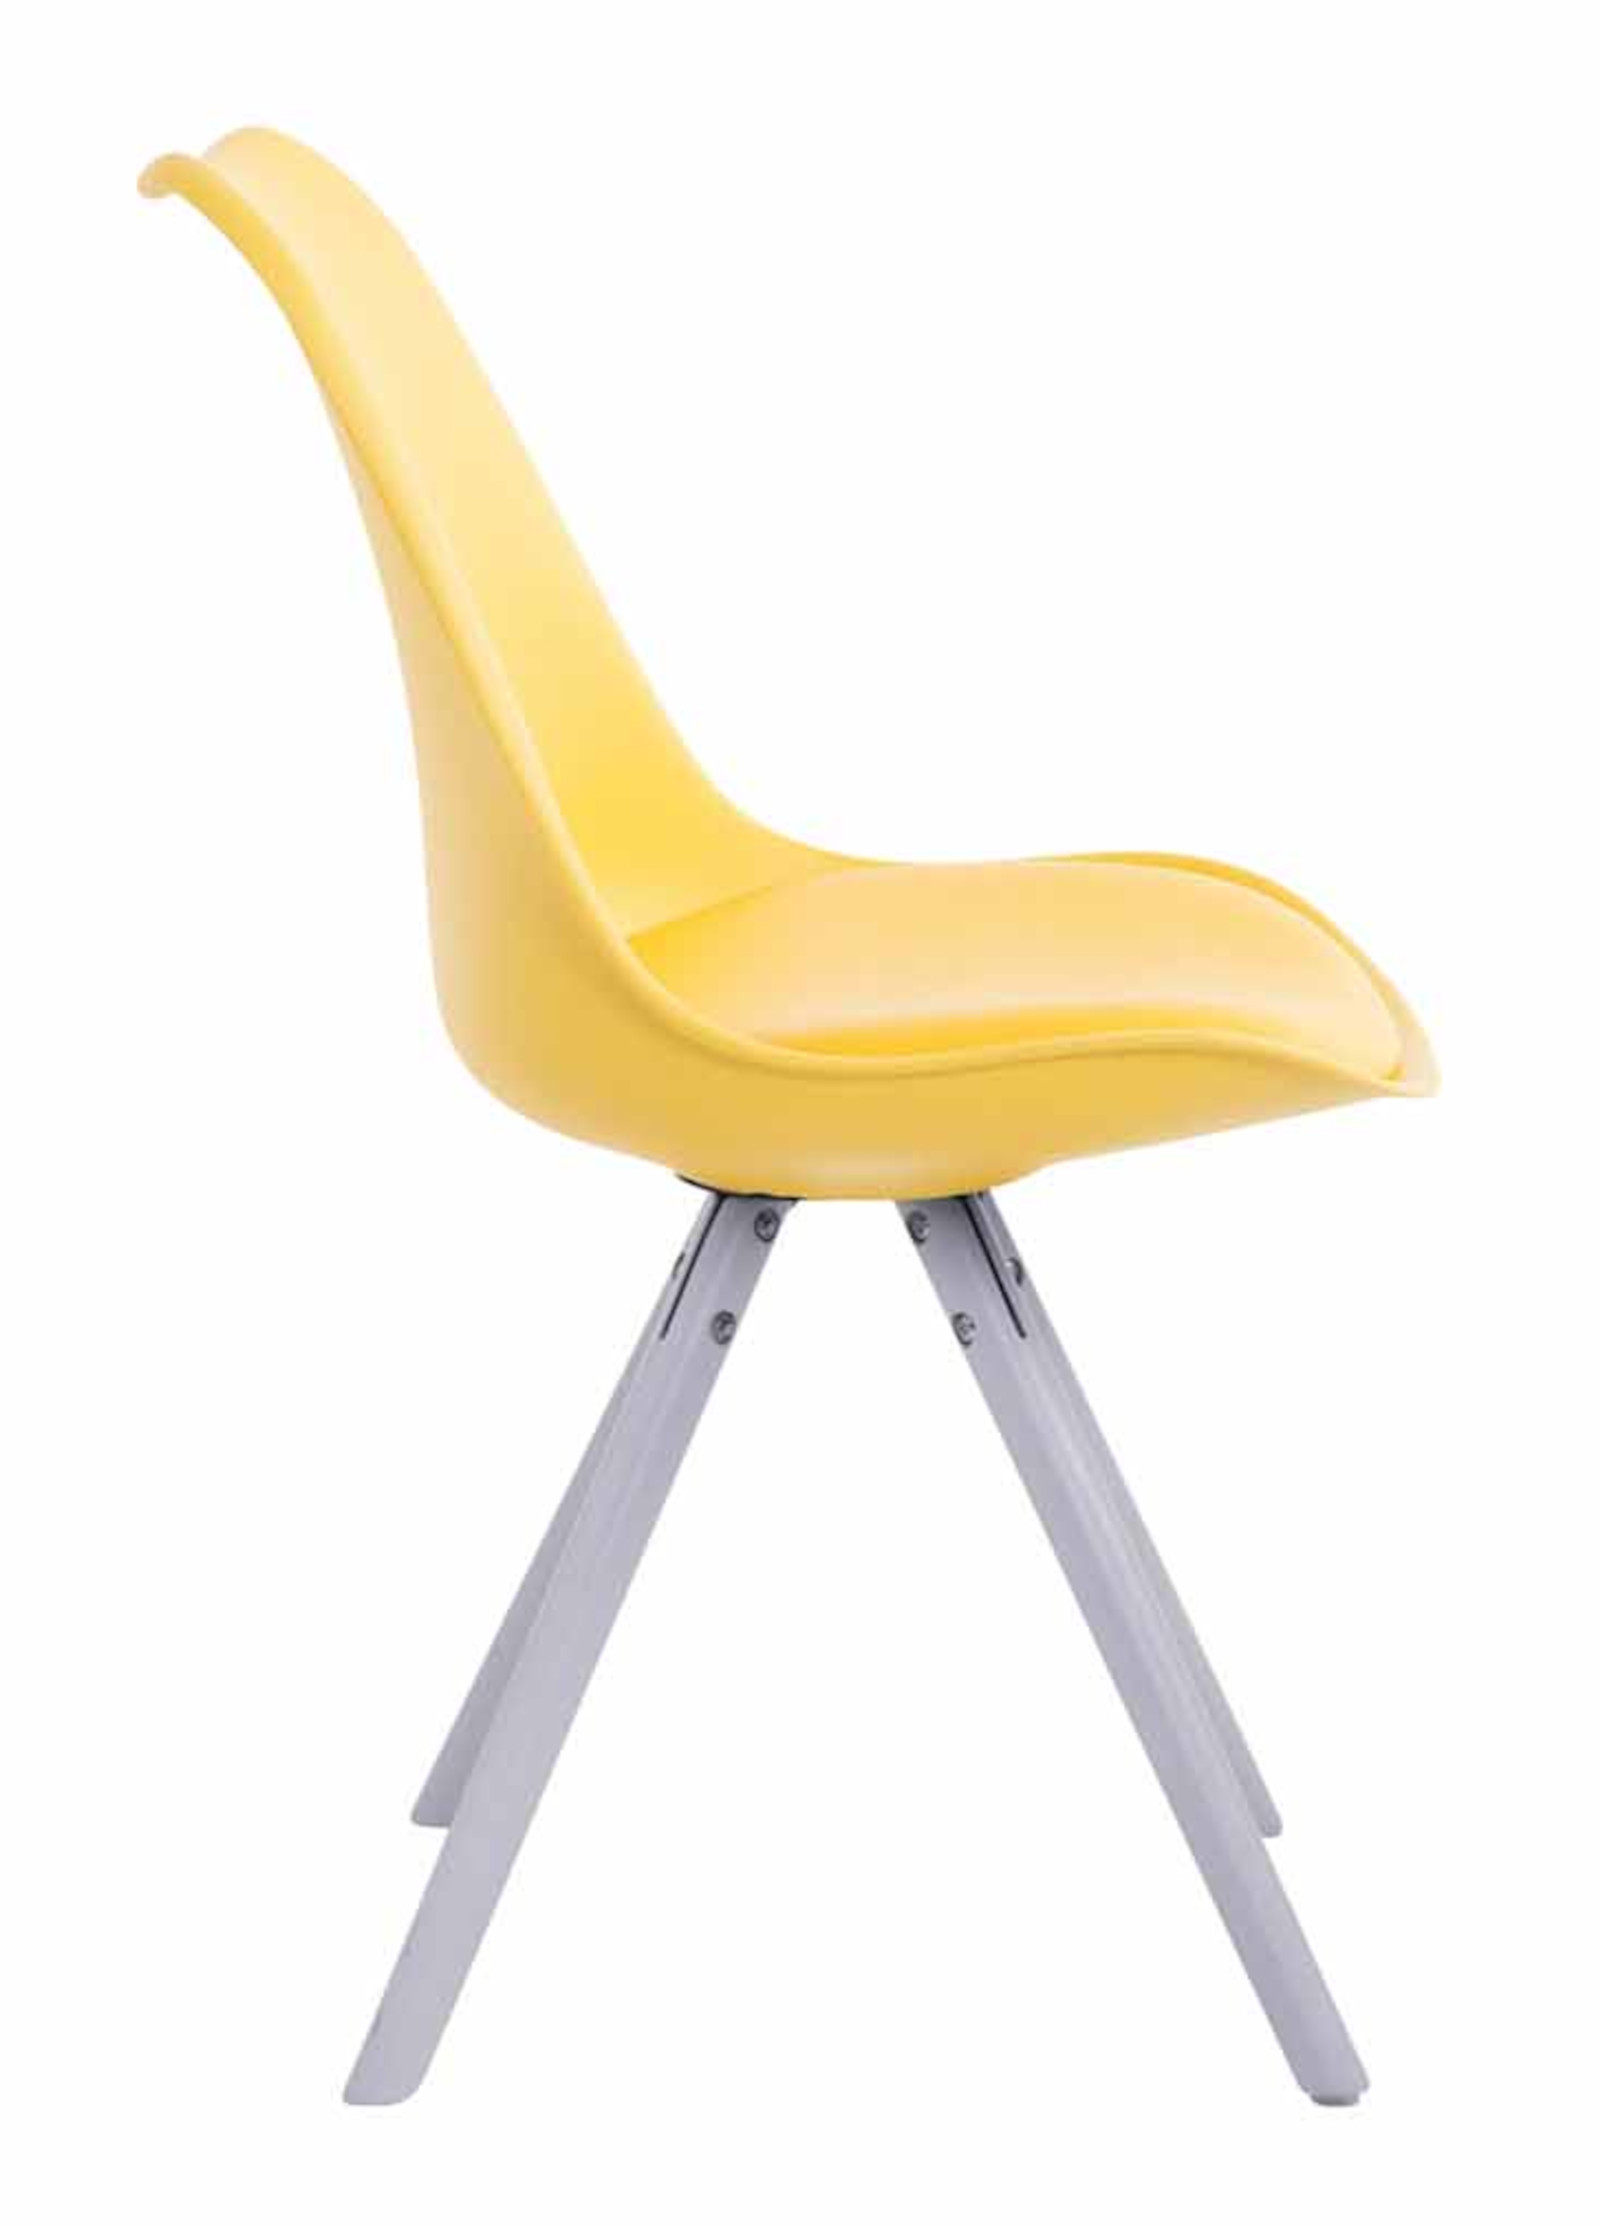 4er Set Stühle Toulouse Kunstleder Rund gelb weiß